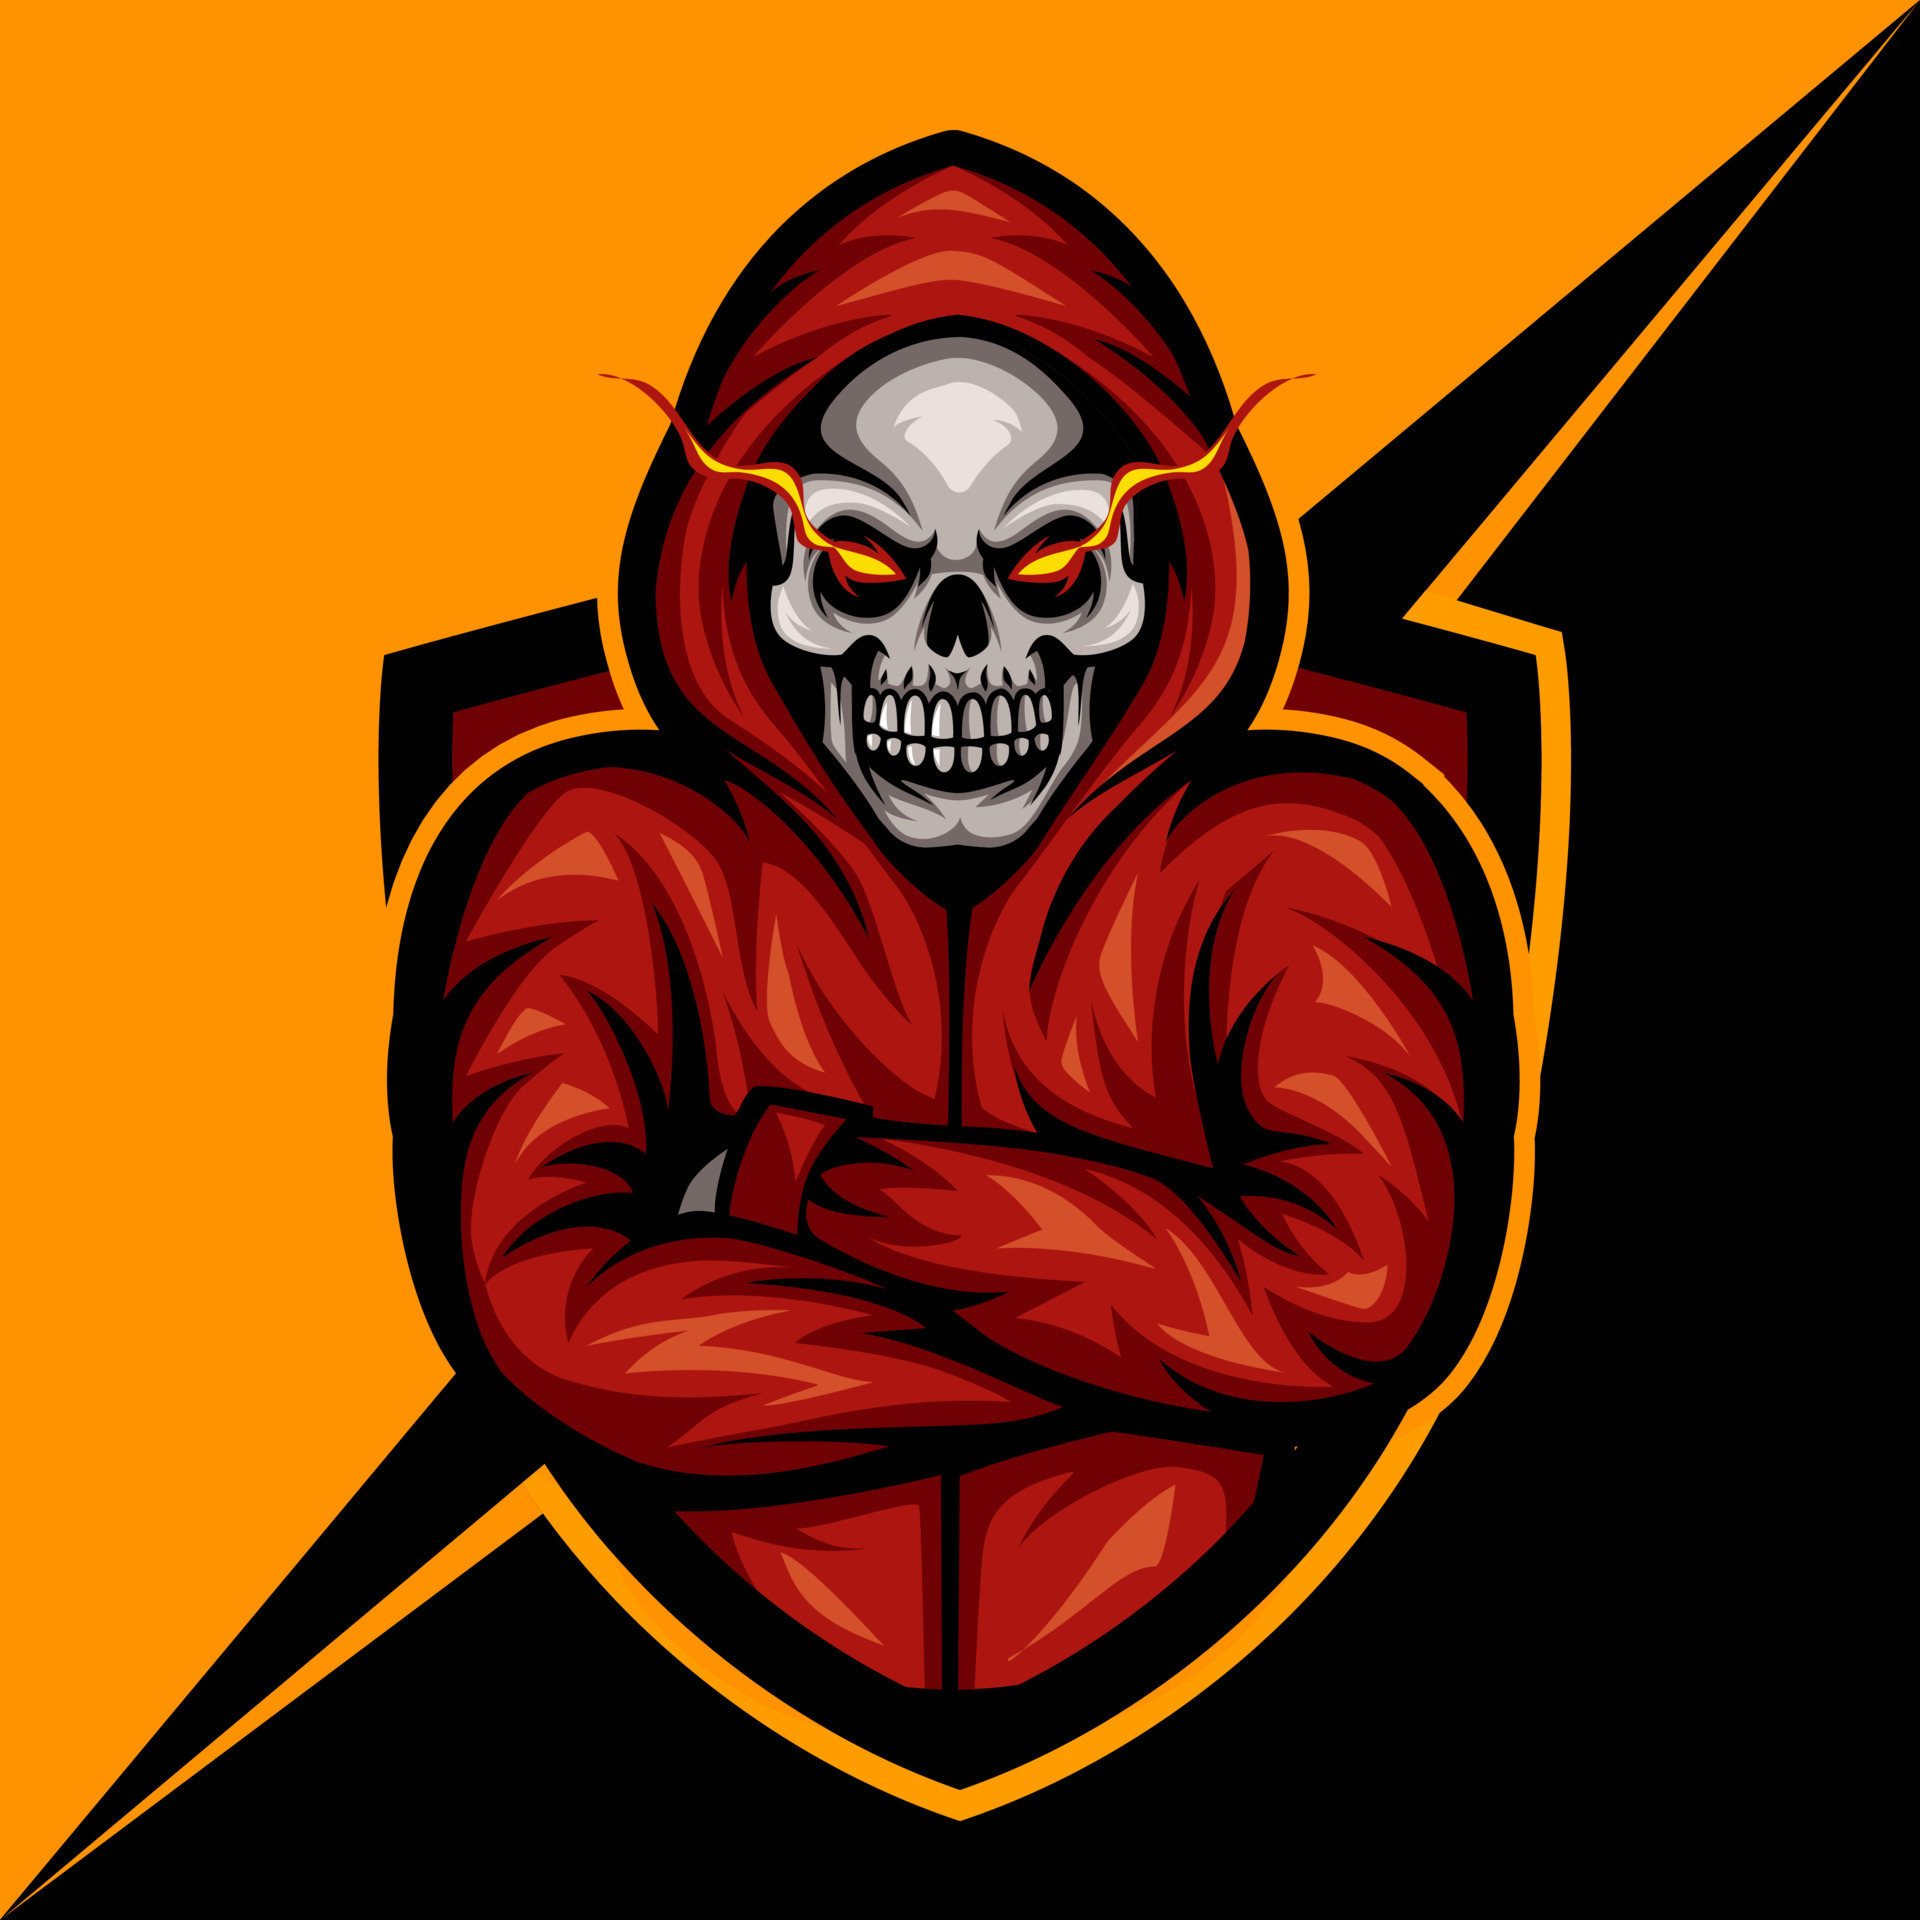 hooded-skull-mascot-esports-logo-illustration-free-vector